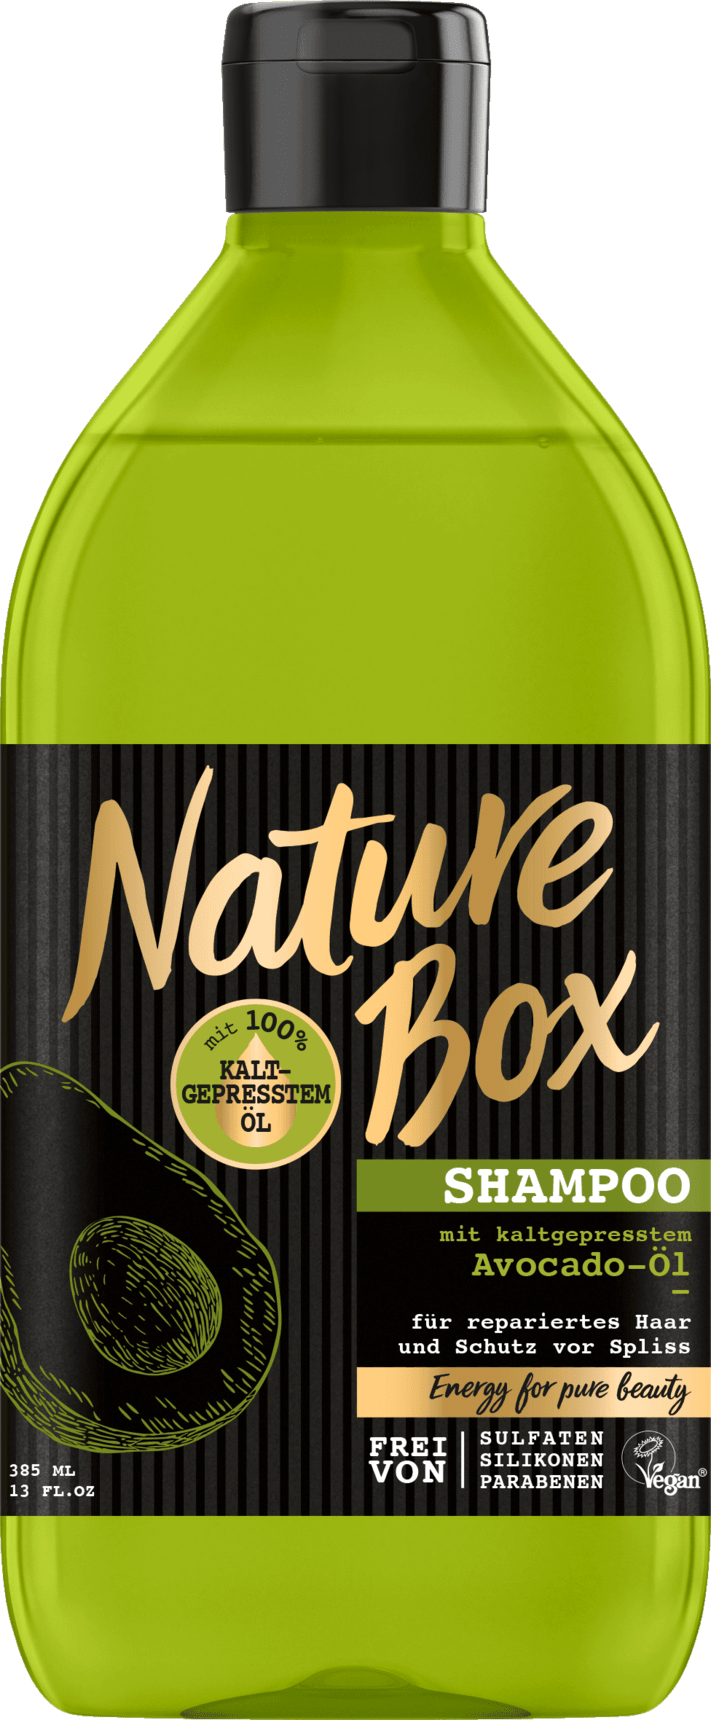 Nature Box Shampoo Avocado 385ml 13 01 Fl Oz Vegan Hair Care From Germany Ebay